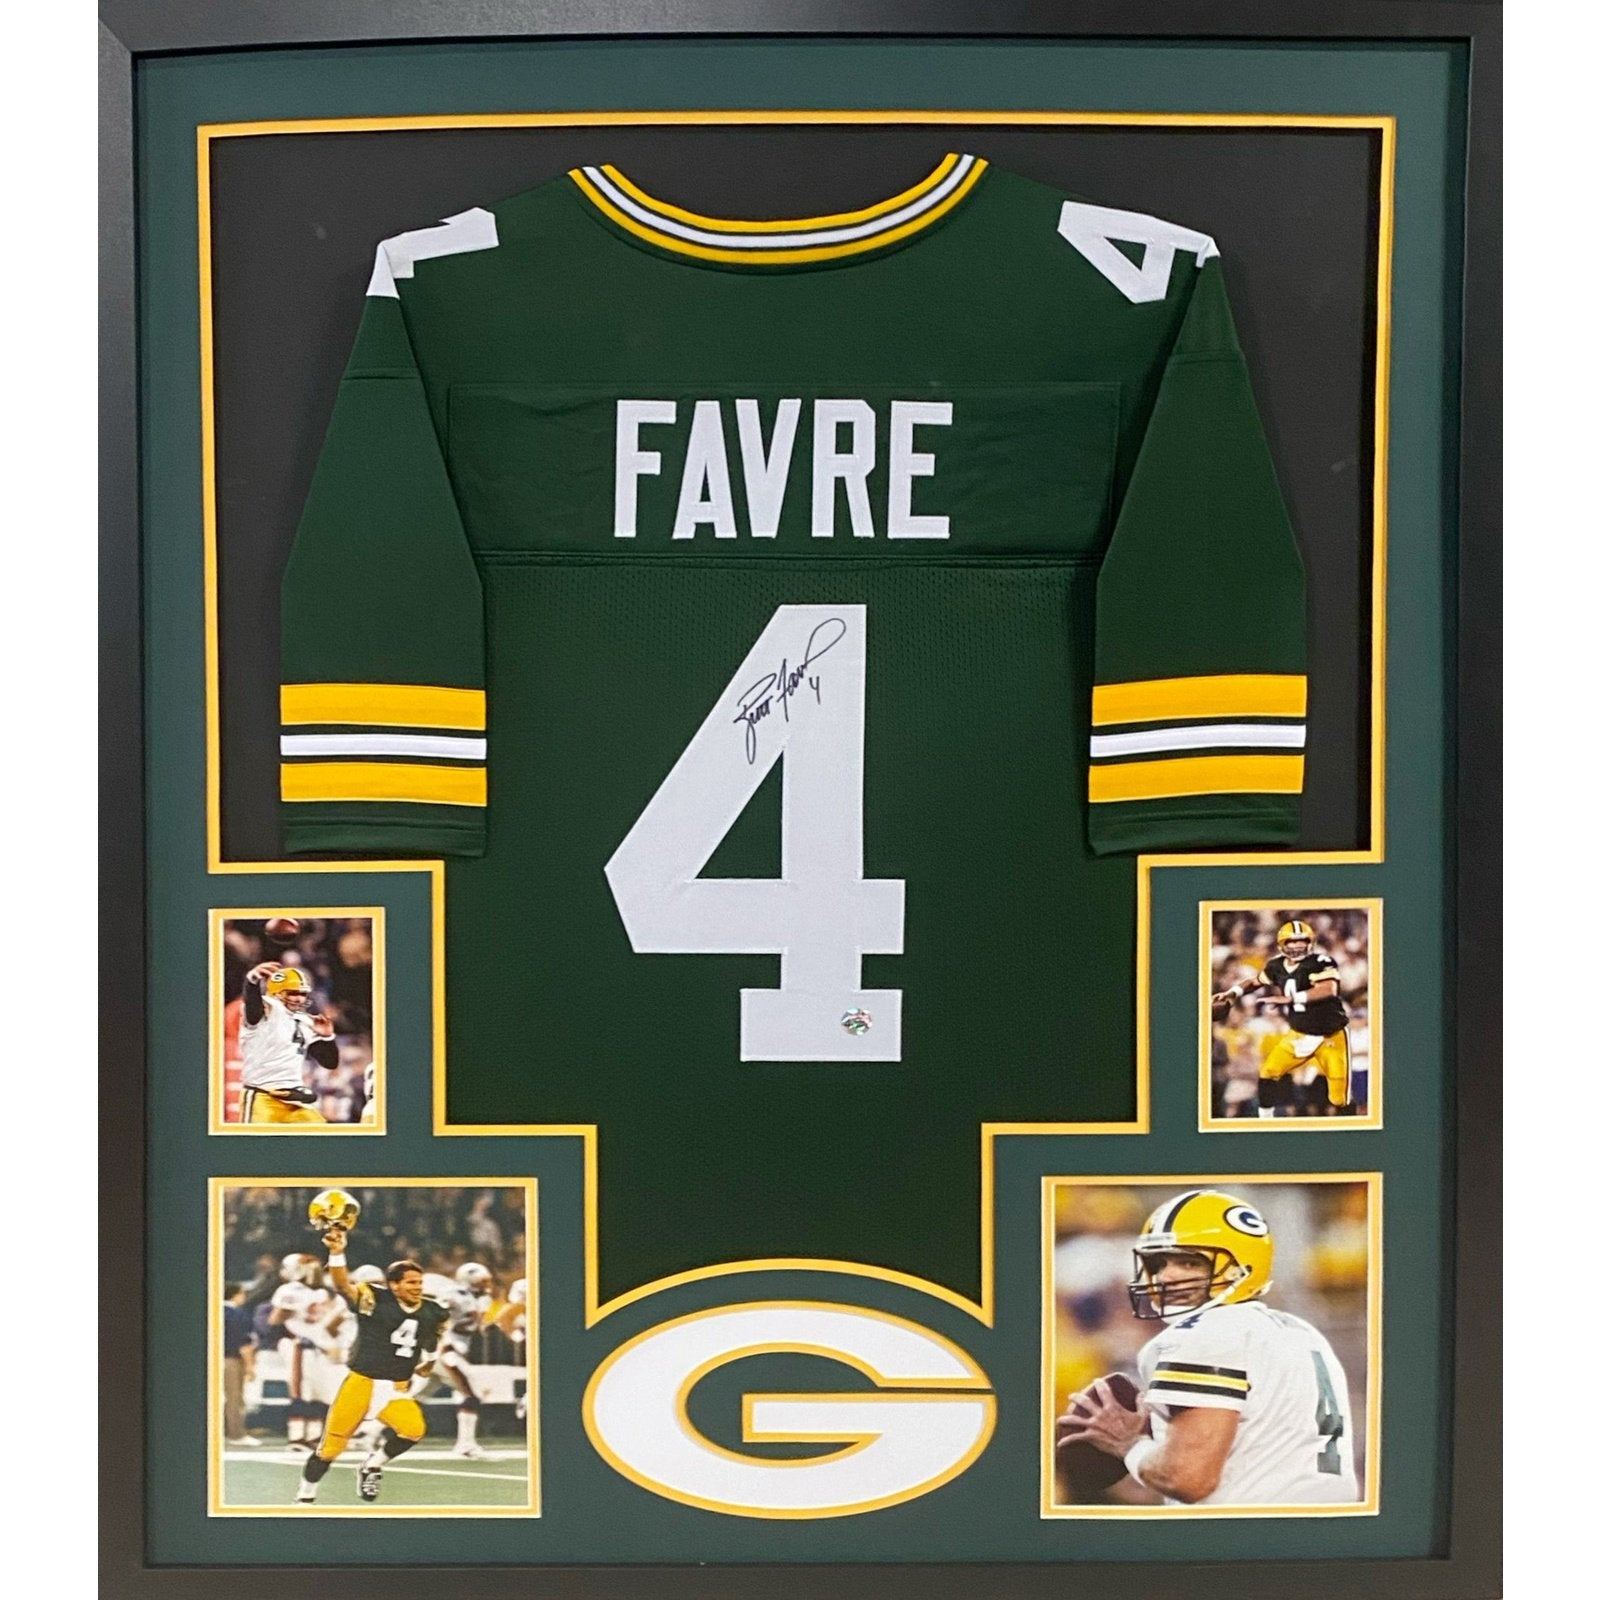 Brett Favre Framed Jersey Autographed Signed Favre COA Green Bay Packers